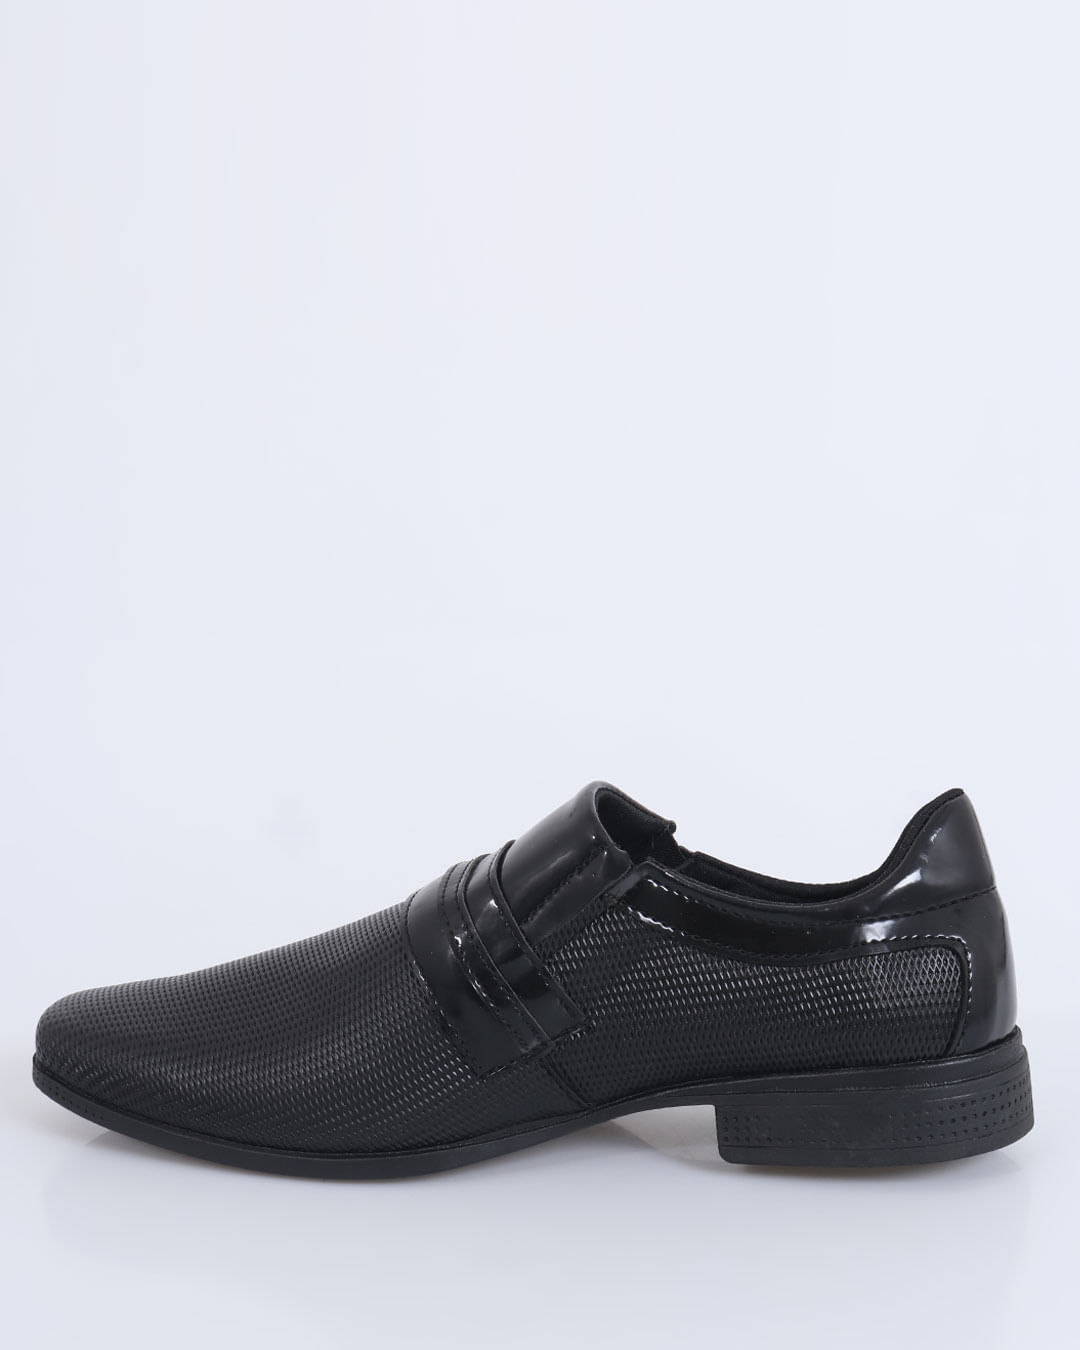 Sapato-Social-Masculino-Texturizado-Recorte-Verniz-Preto